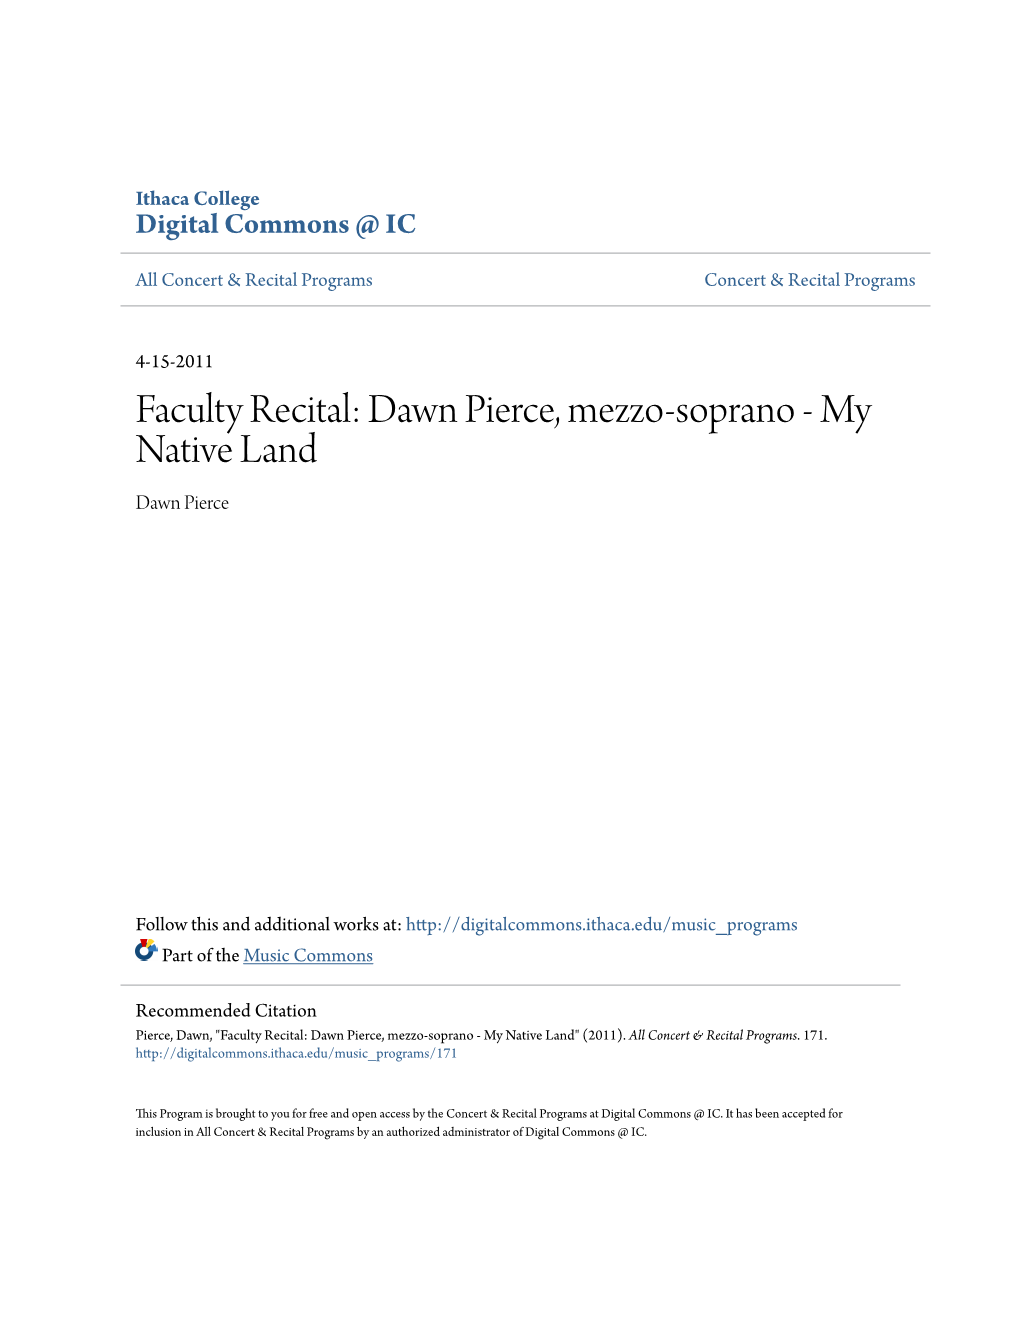 Faculty Recital: Dawn Pierce, Mezzo-Soprano - My Native Land Dawn Pierce